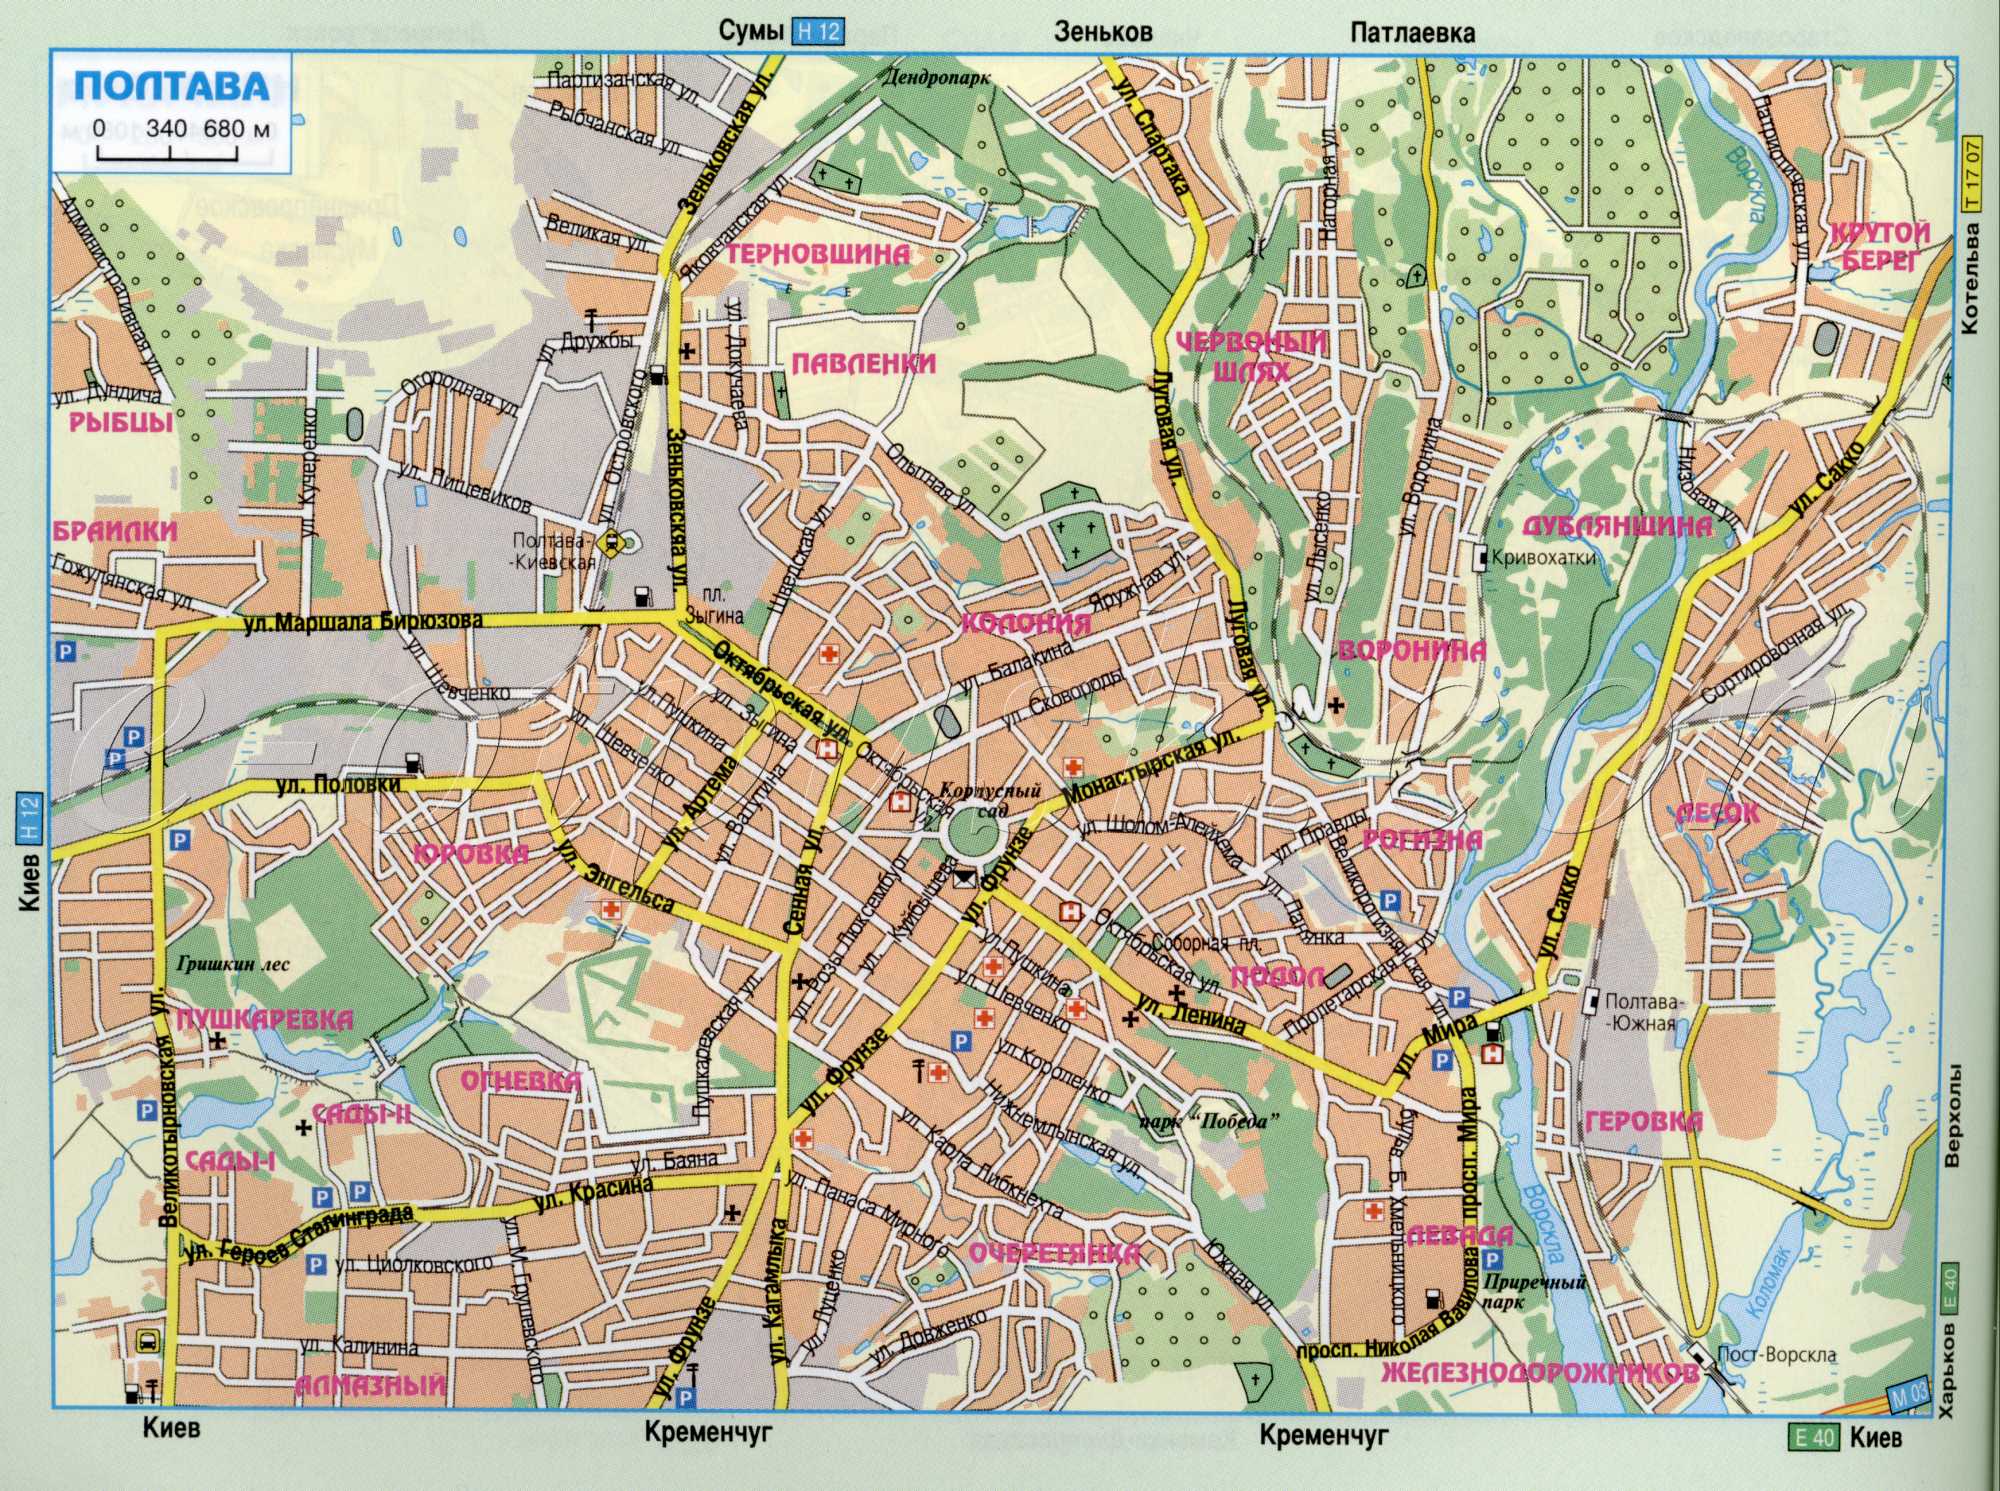 Map of Poltava, Poltava city roads satin tourist cars. download for free